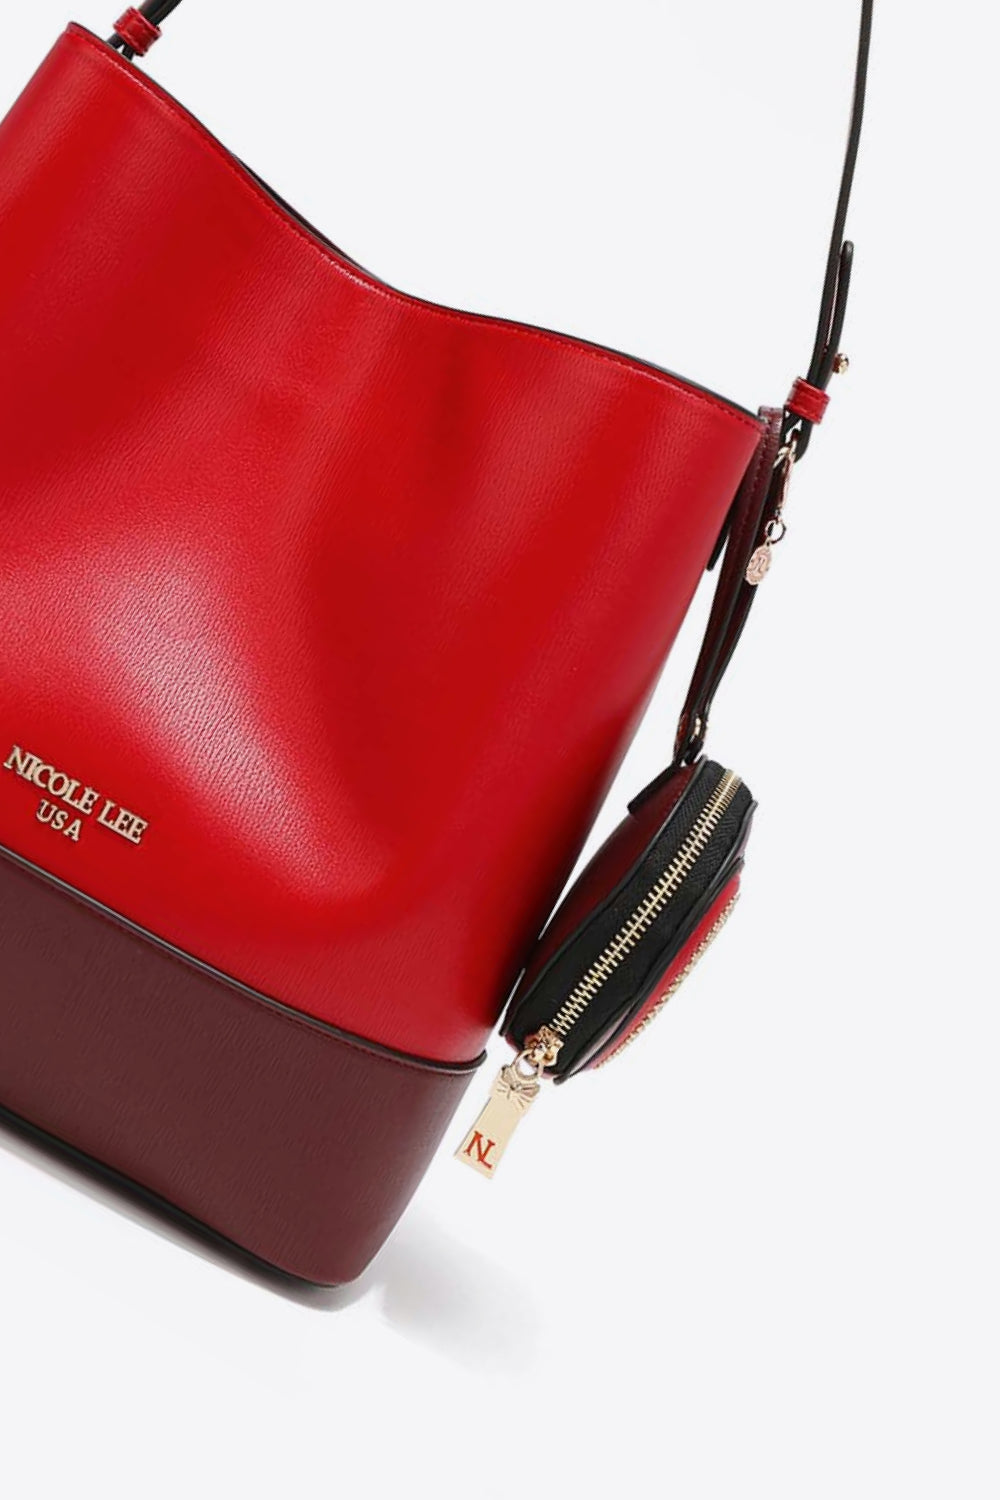 Nicole Lee USA All Day, Everyday Handbag Red / One Size